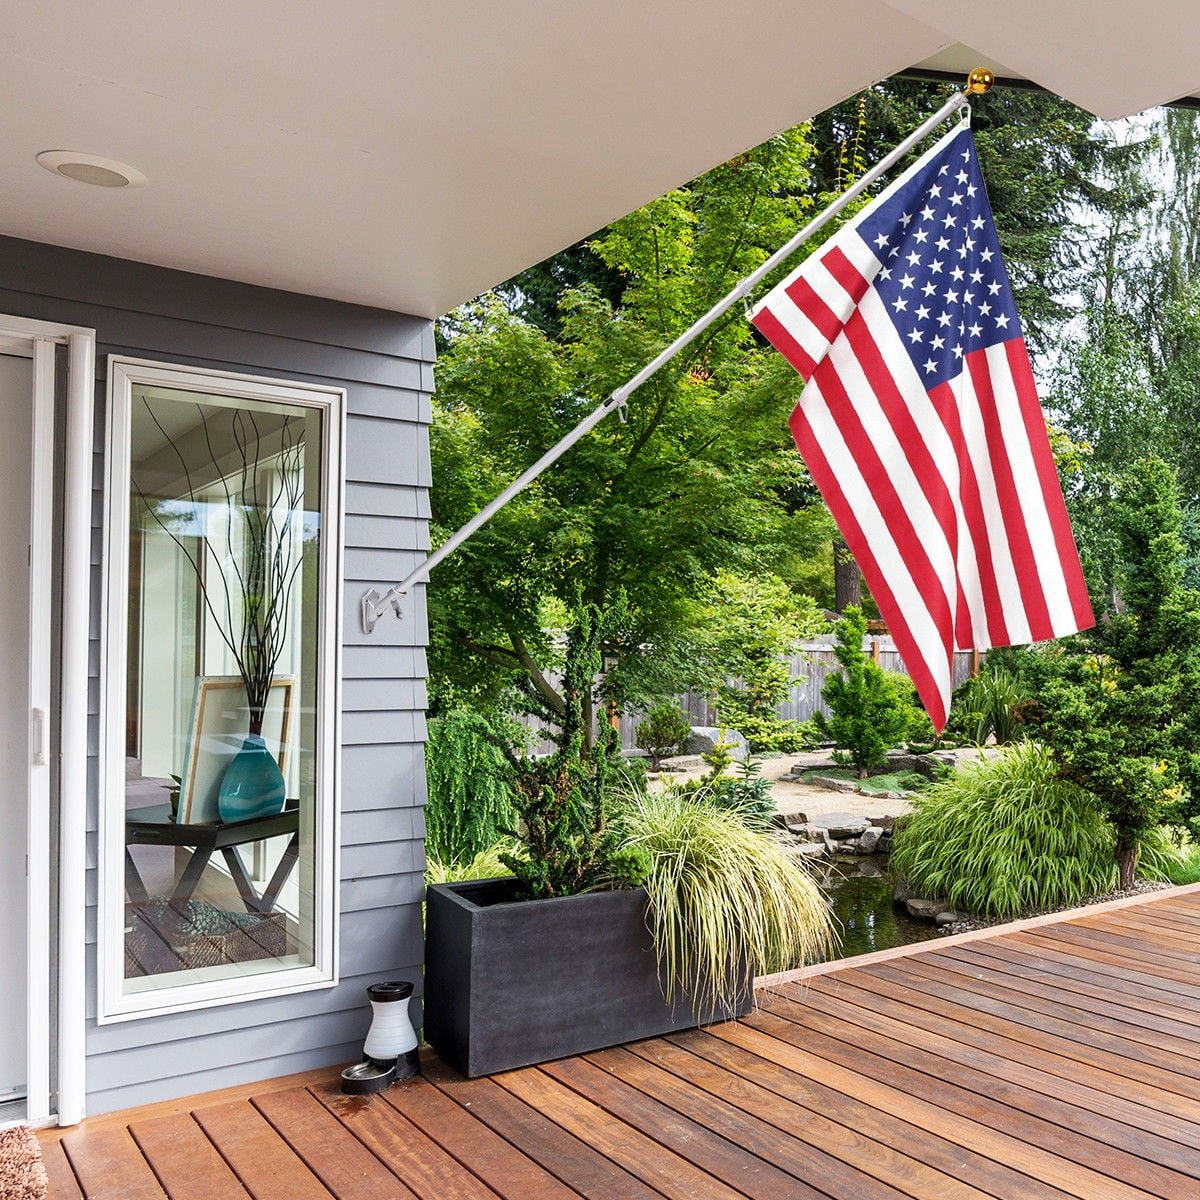 Somtton HeavyDuty Flag Pole with Bracket, 6FT Flagpole Kit for House American Flag